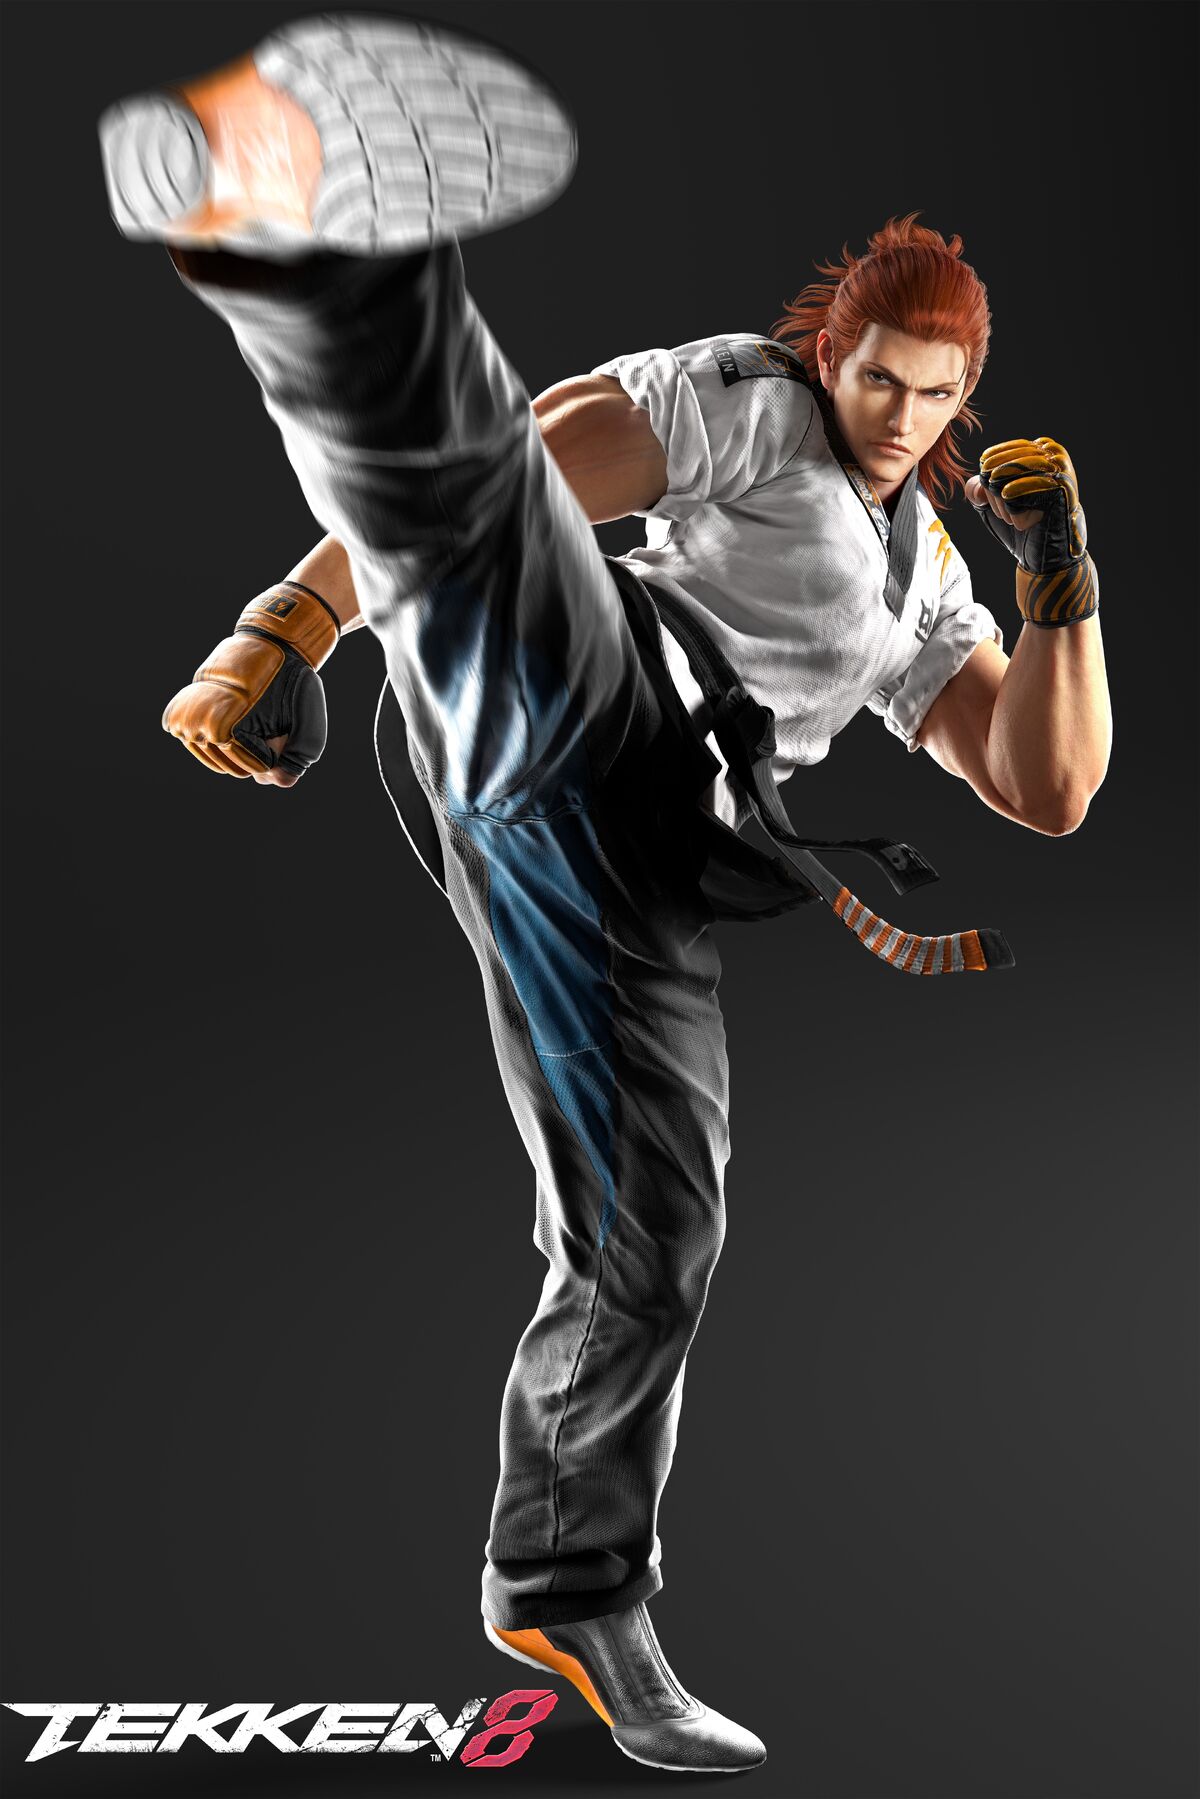 Taekwondo e o personagem “Hwoarang” do jogo Tekken! - Mestre